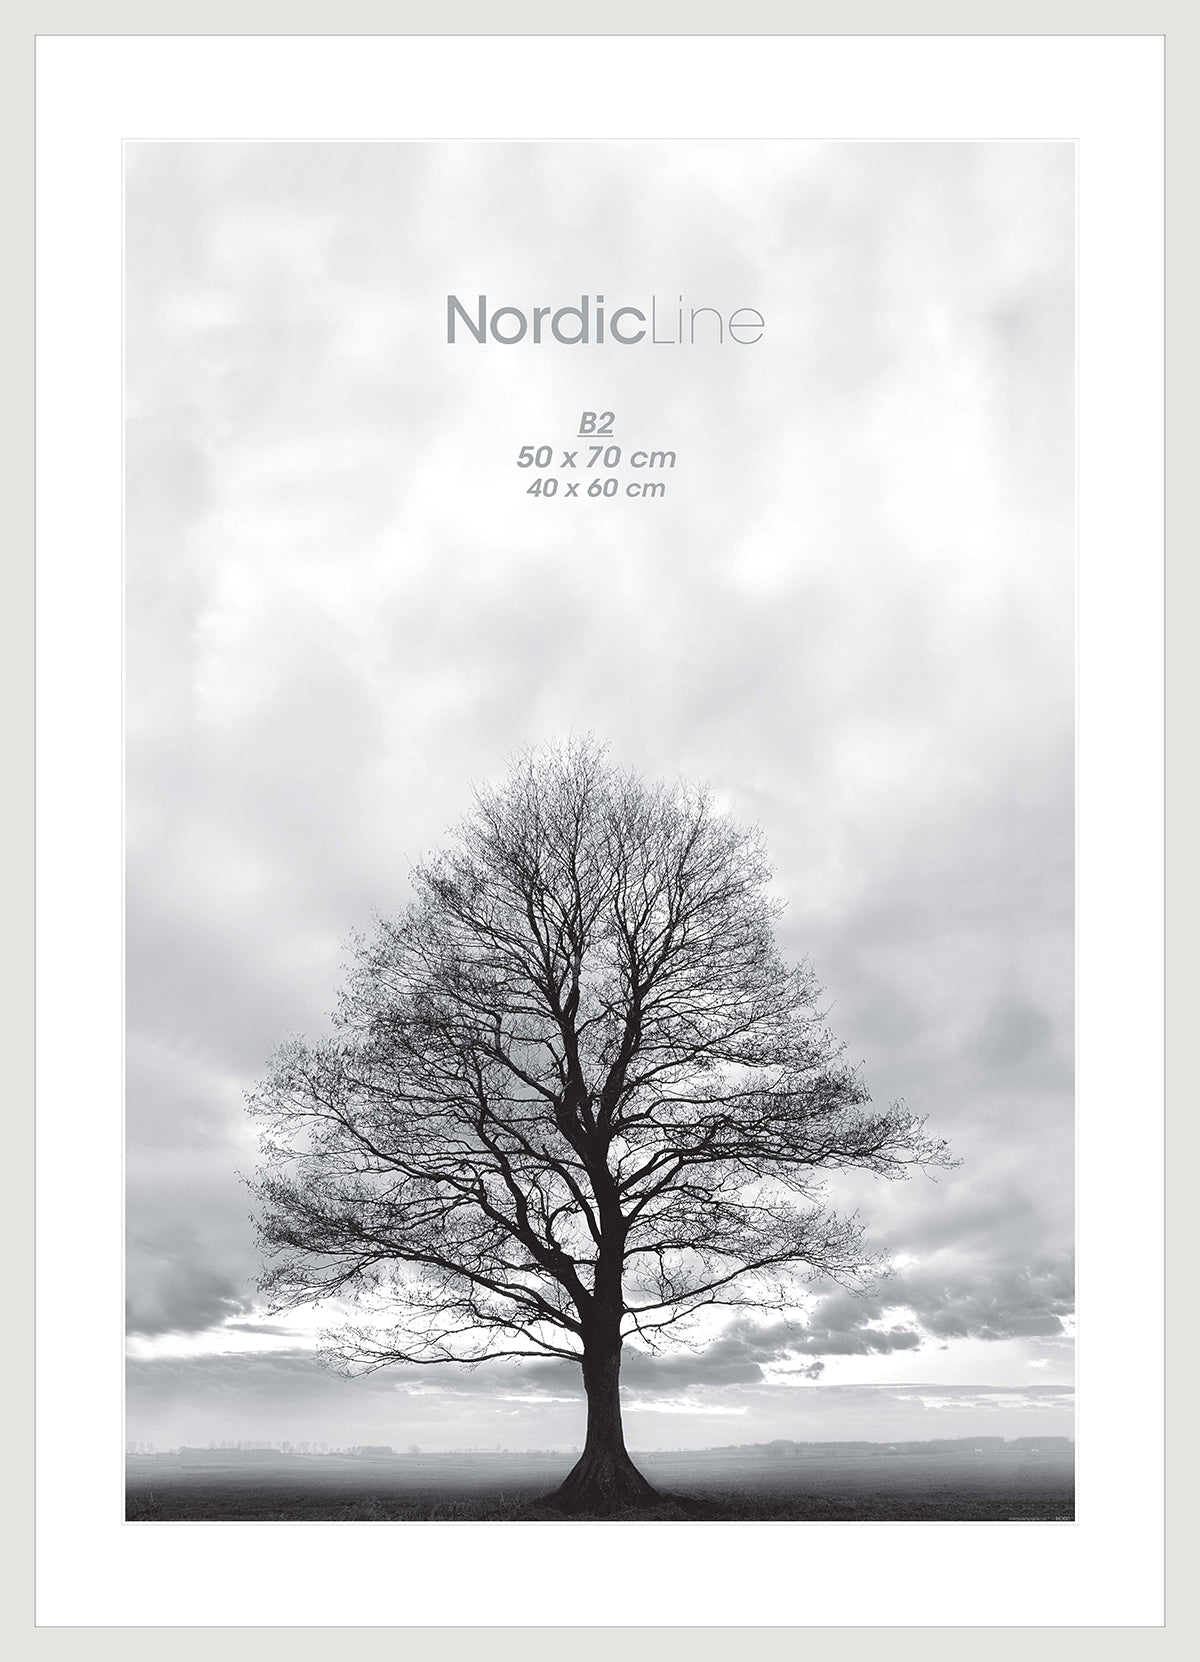 INCADO Κορνίζα Κορνίζα Nordic Line Slim Safety Modern Άσπρο Ξύλο Ακ. Γυαλί 30x40 cm INCADO